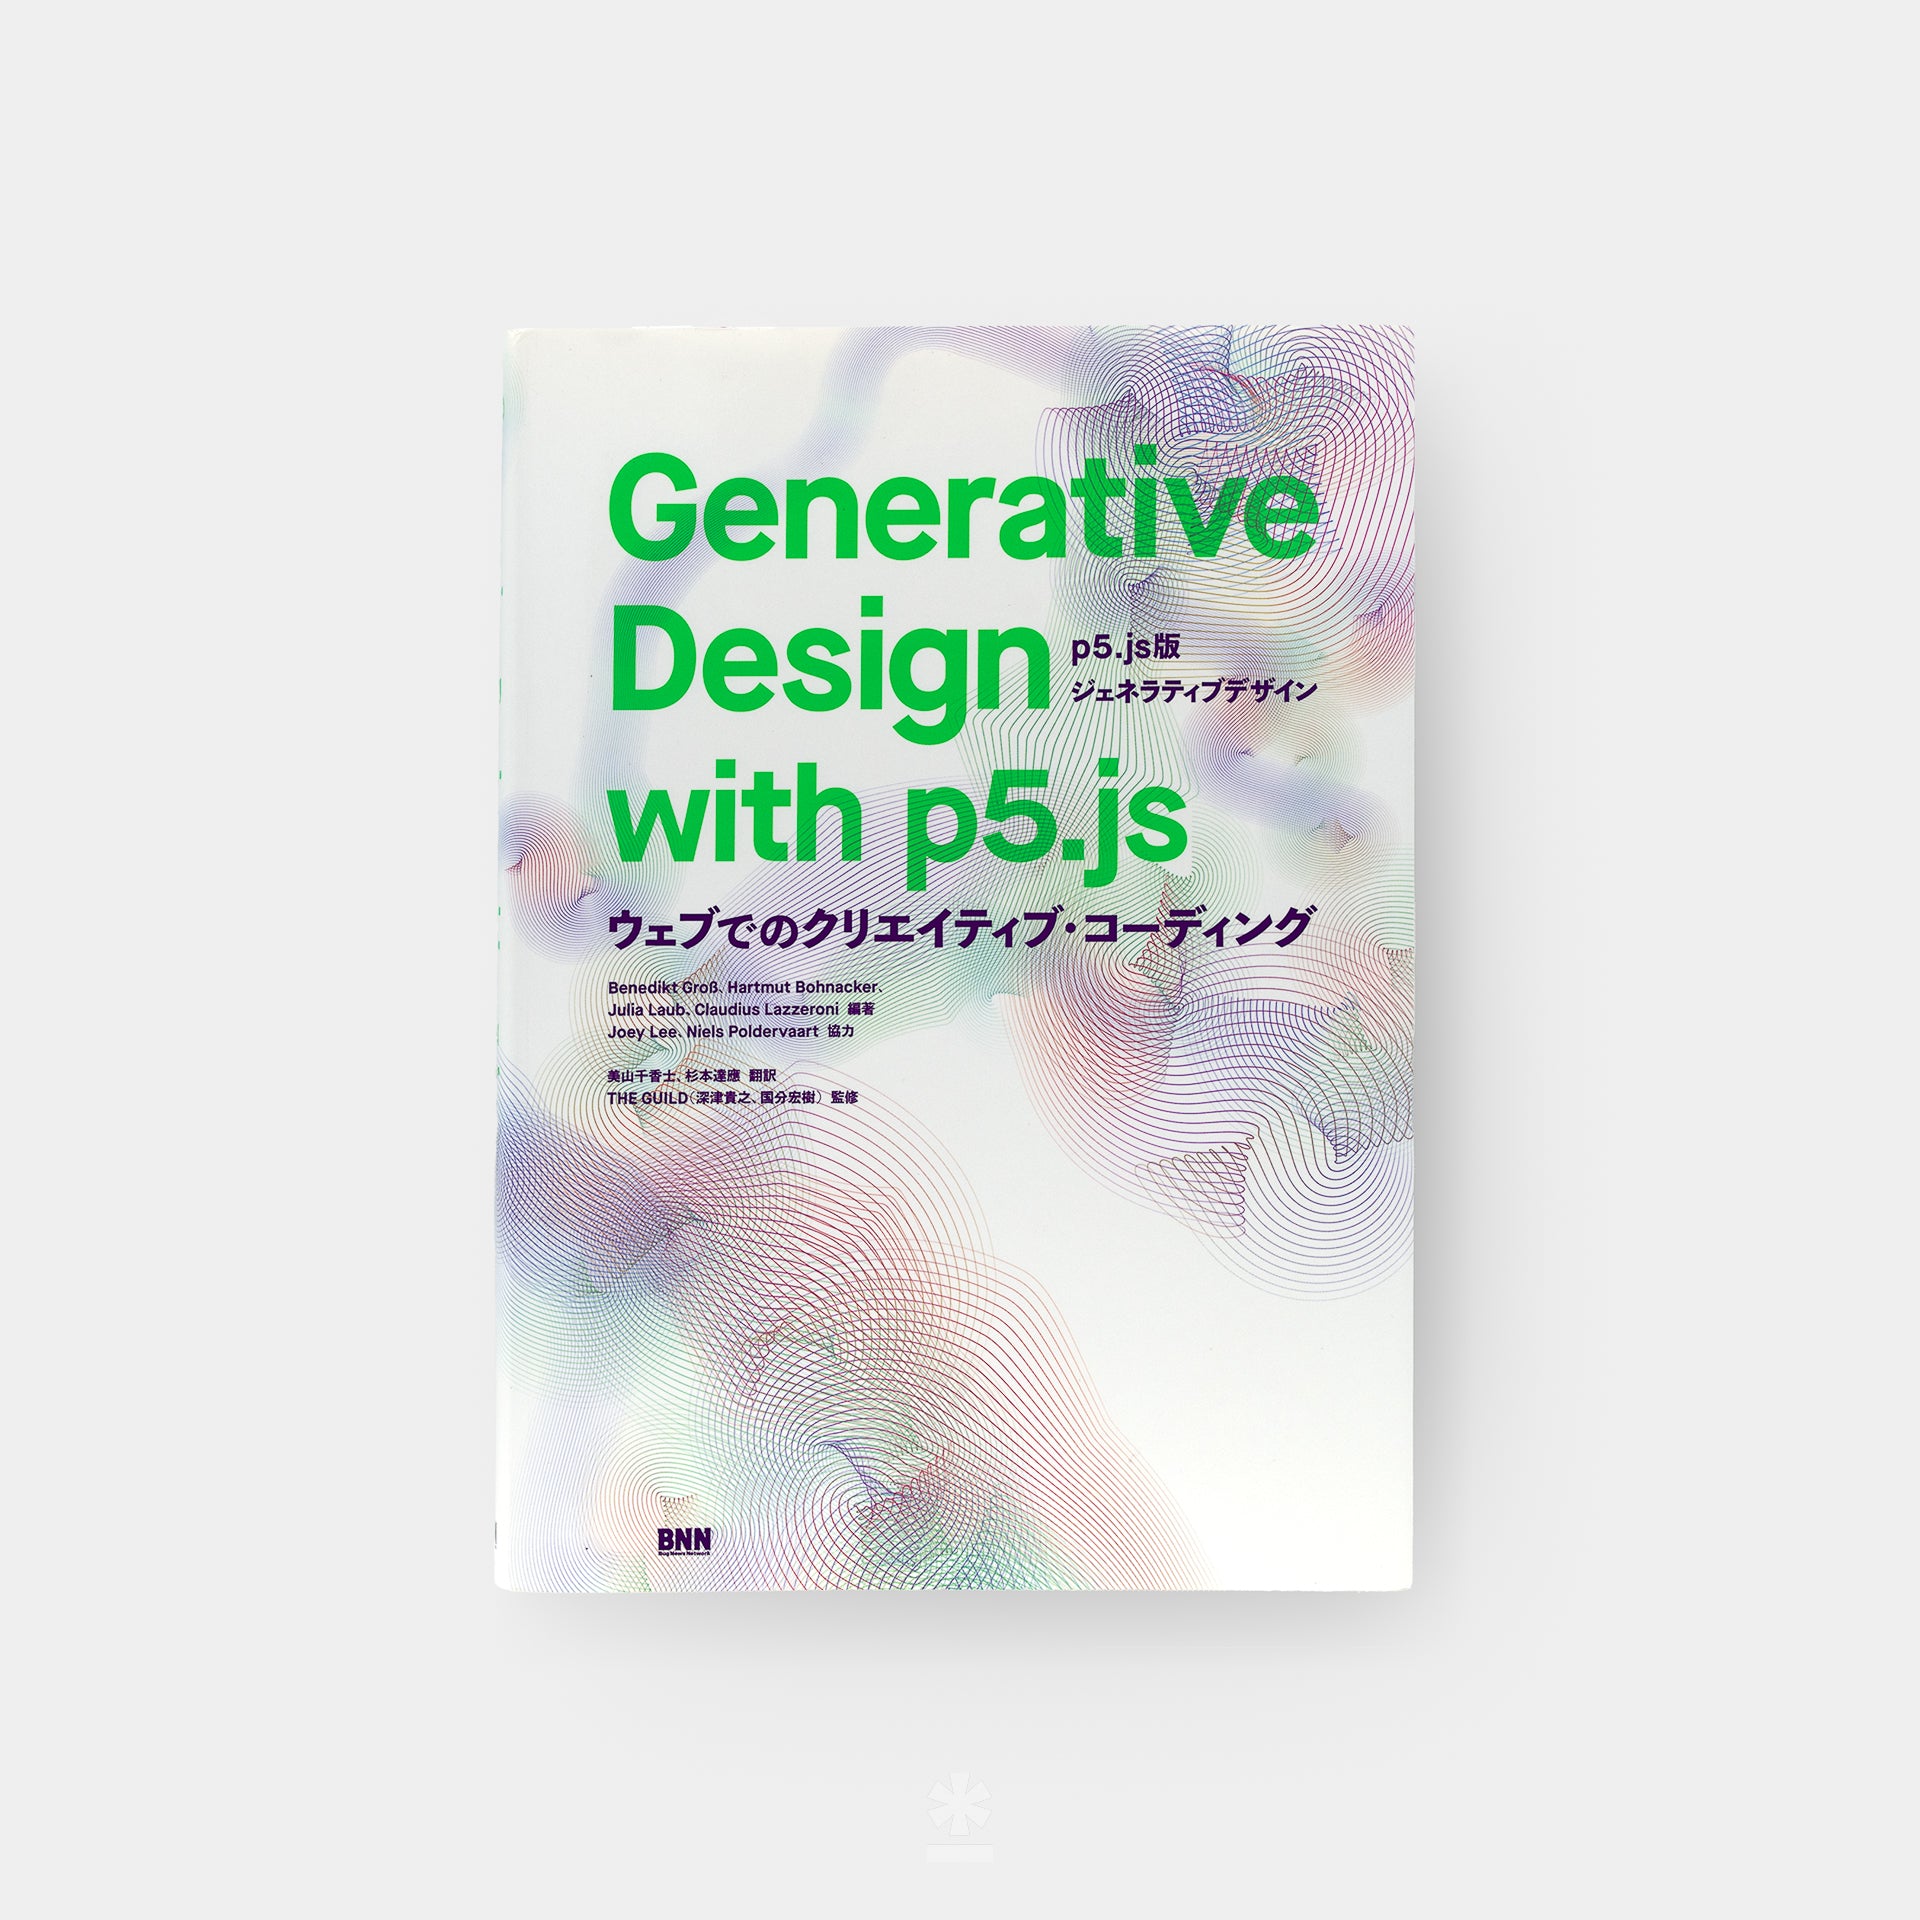 Generative Design with p5.js (p5.js版ジェネラティブデザイン)